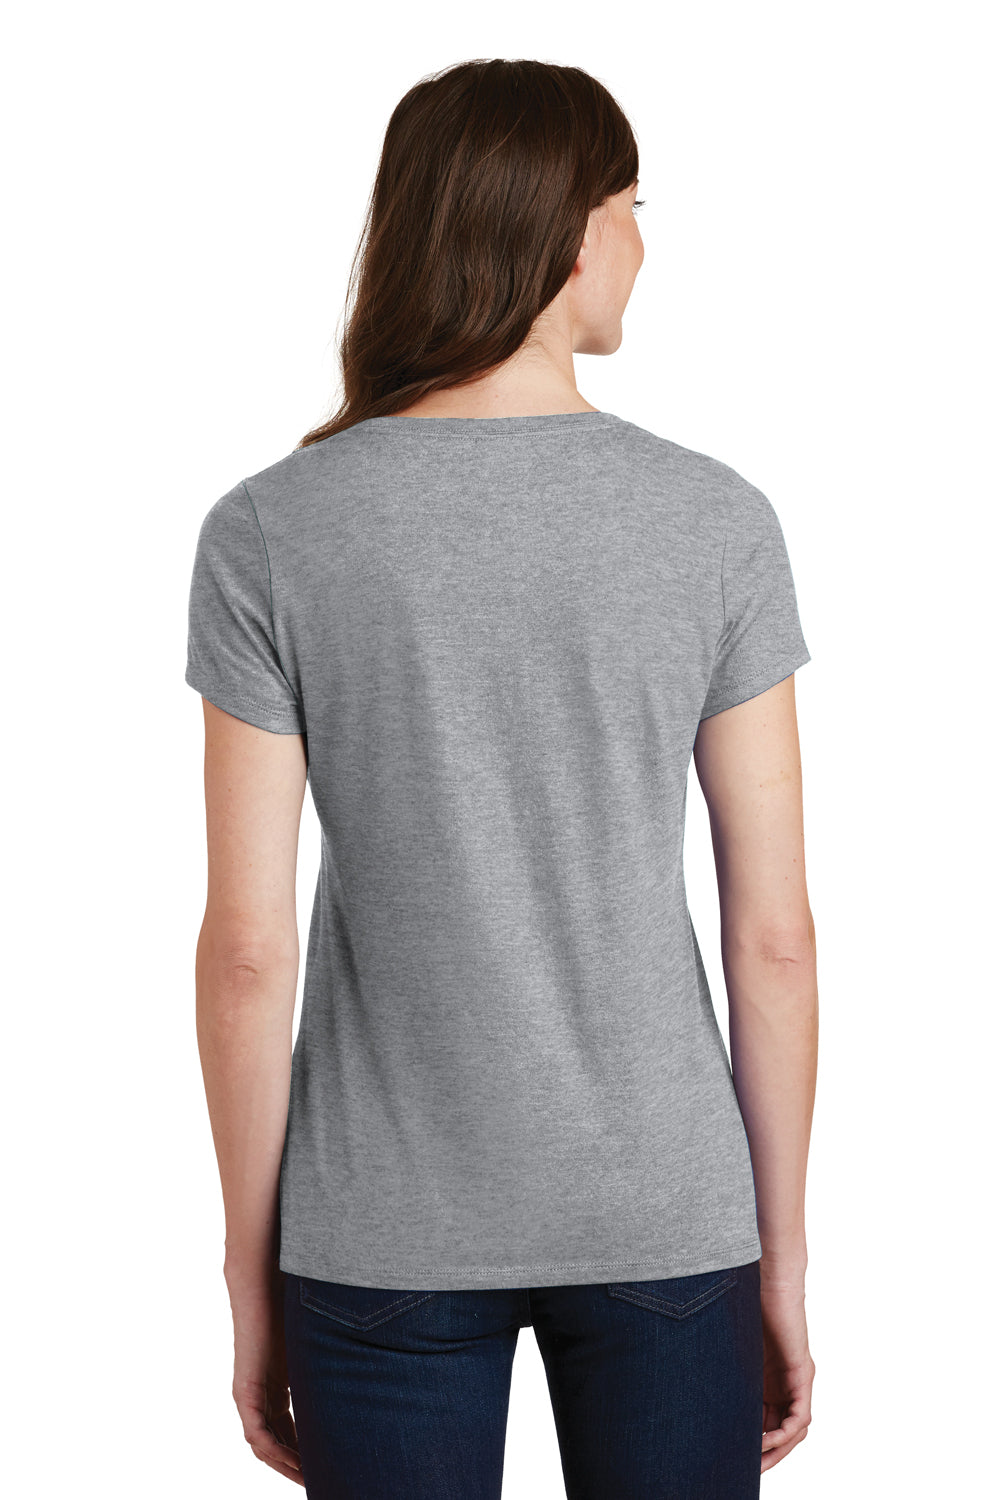 Port & Company LPC450V Womens Fan Favorite Short Sleeve V-Neck T-Shirt Heather Grey Back